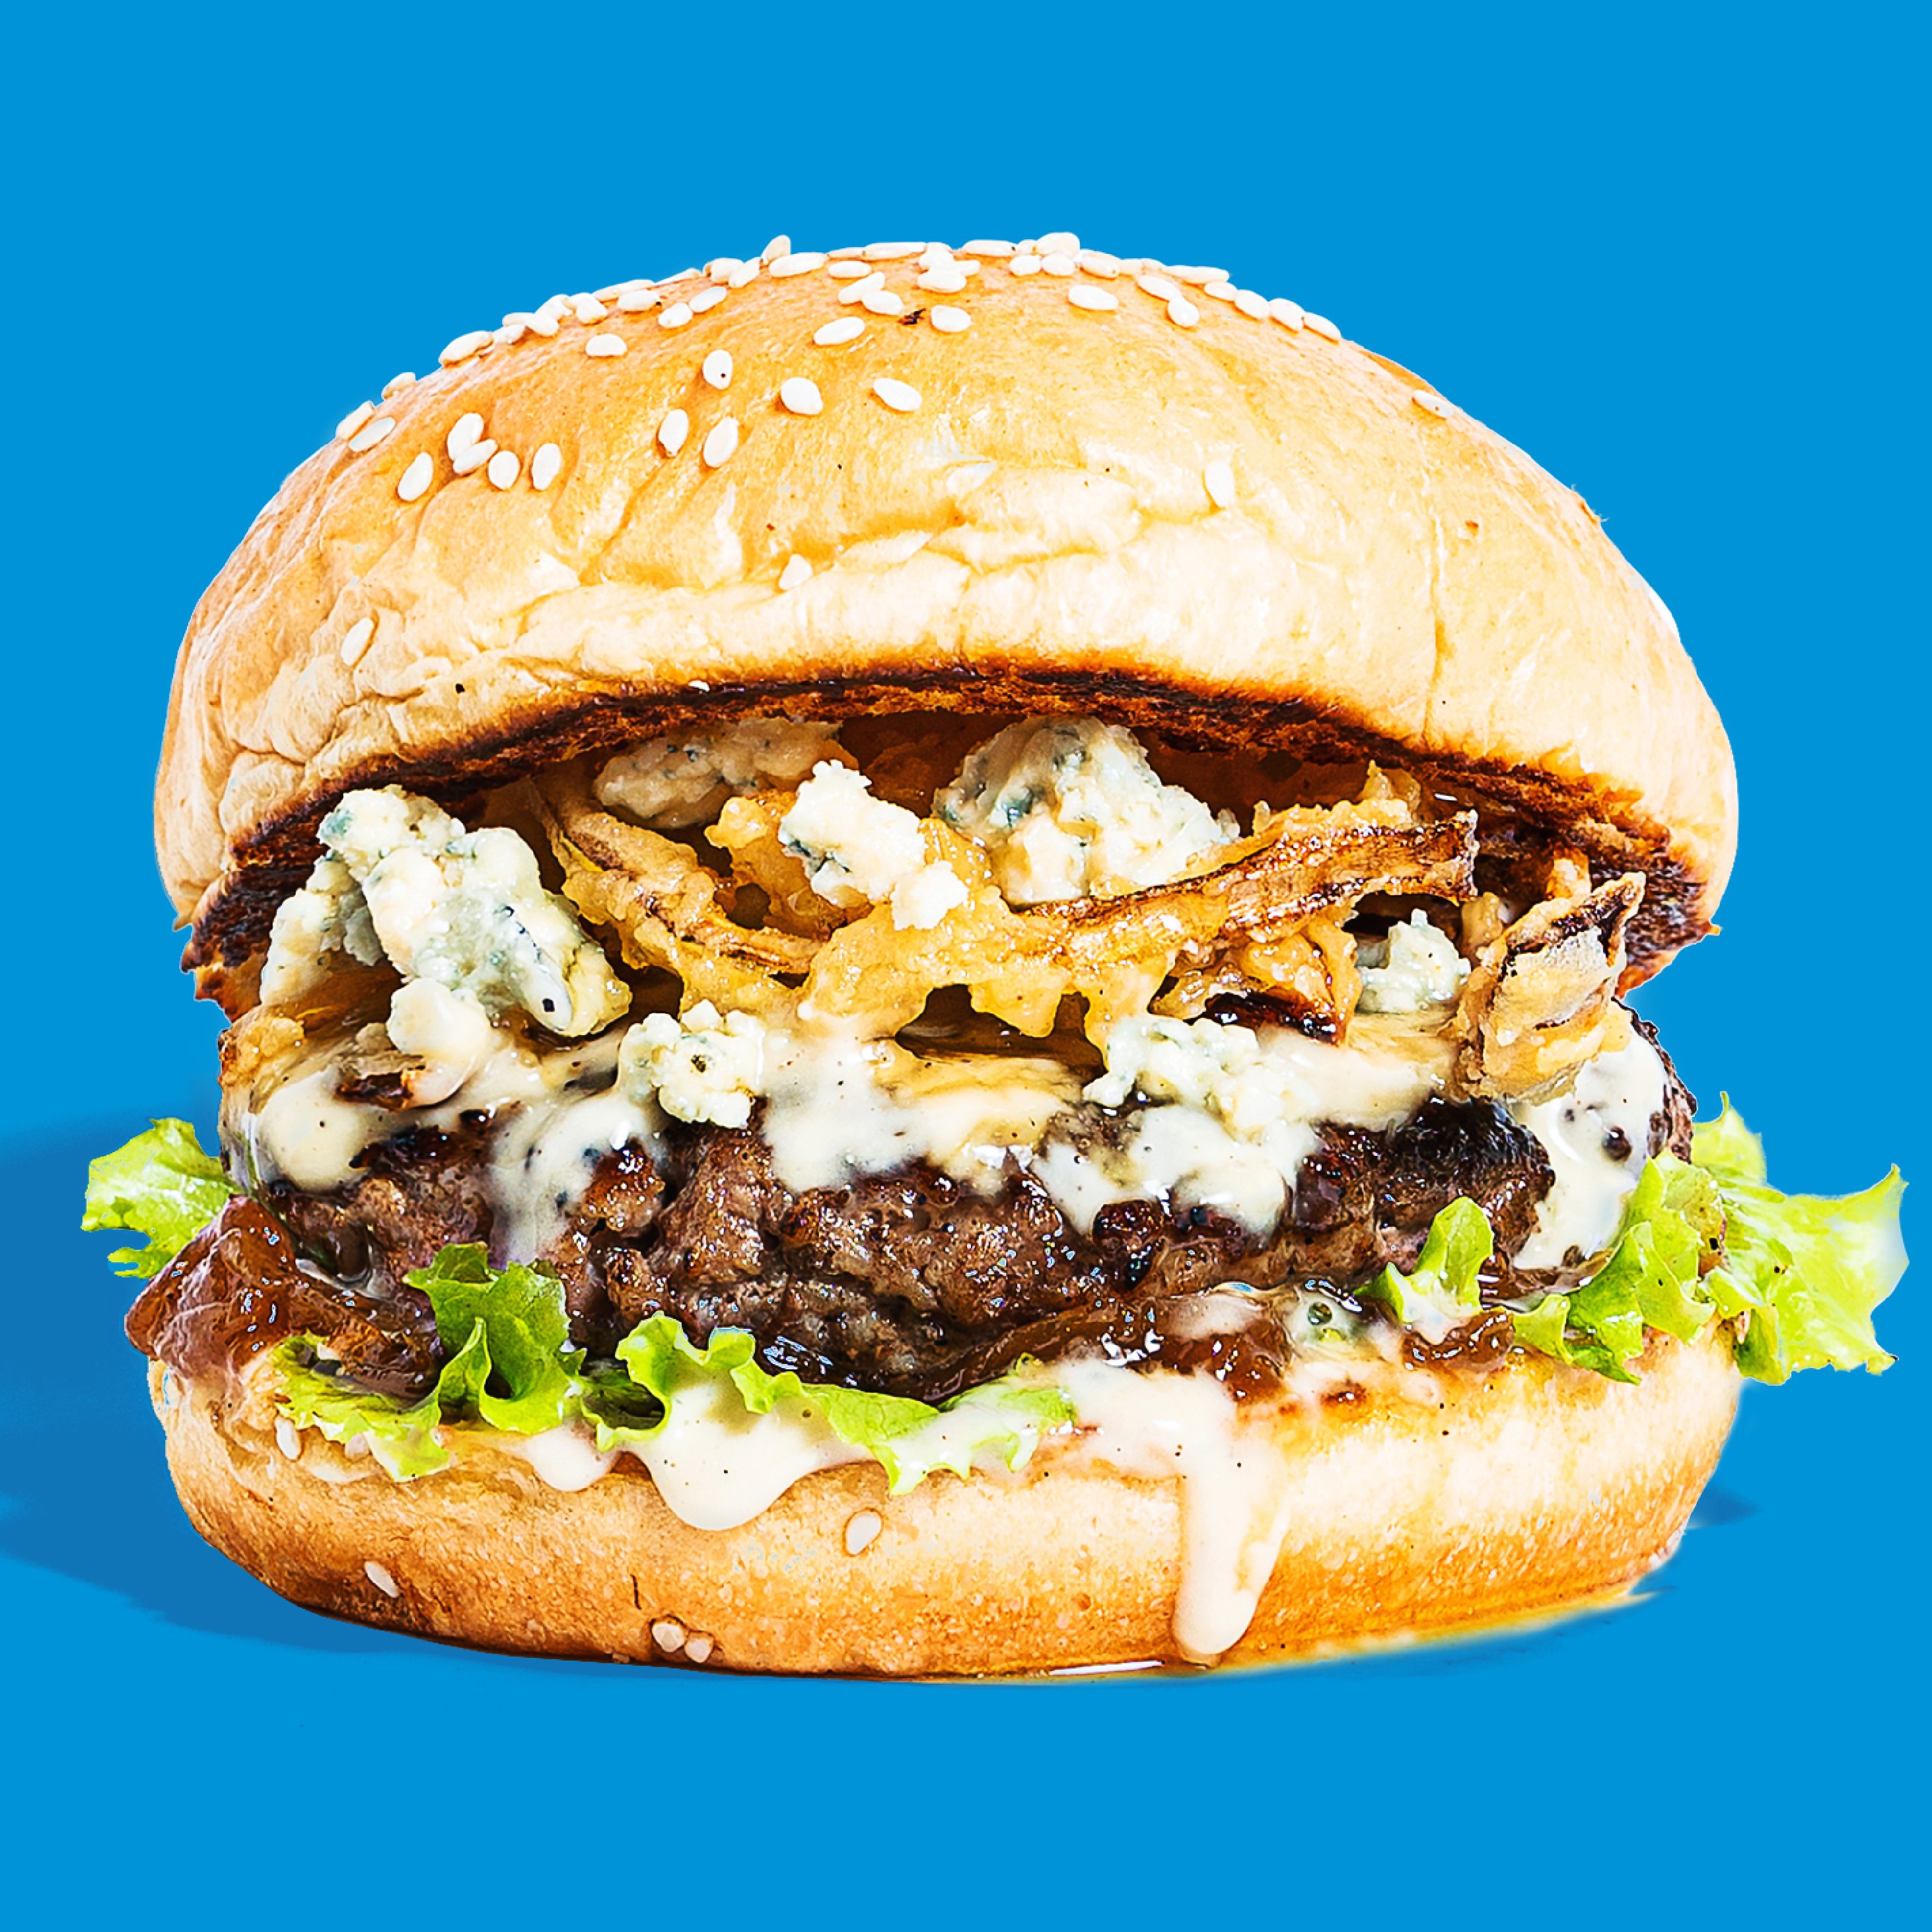 8Cuts’ Bleu Cheeseburger returns to menu